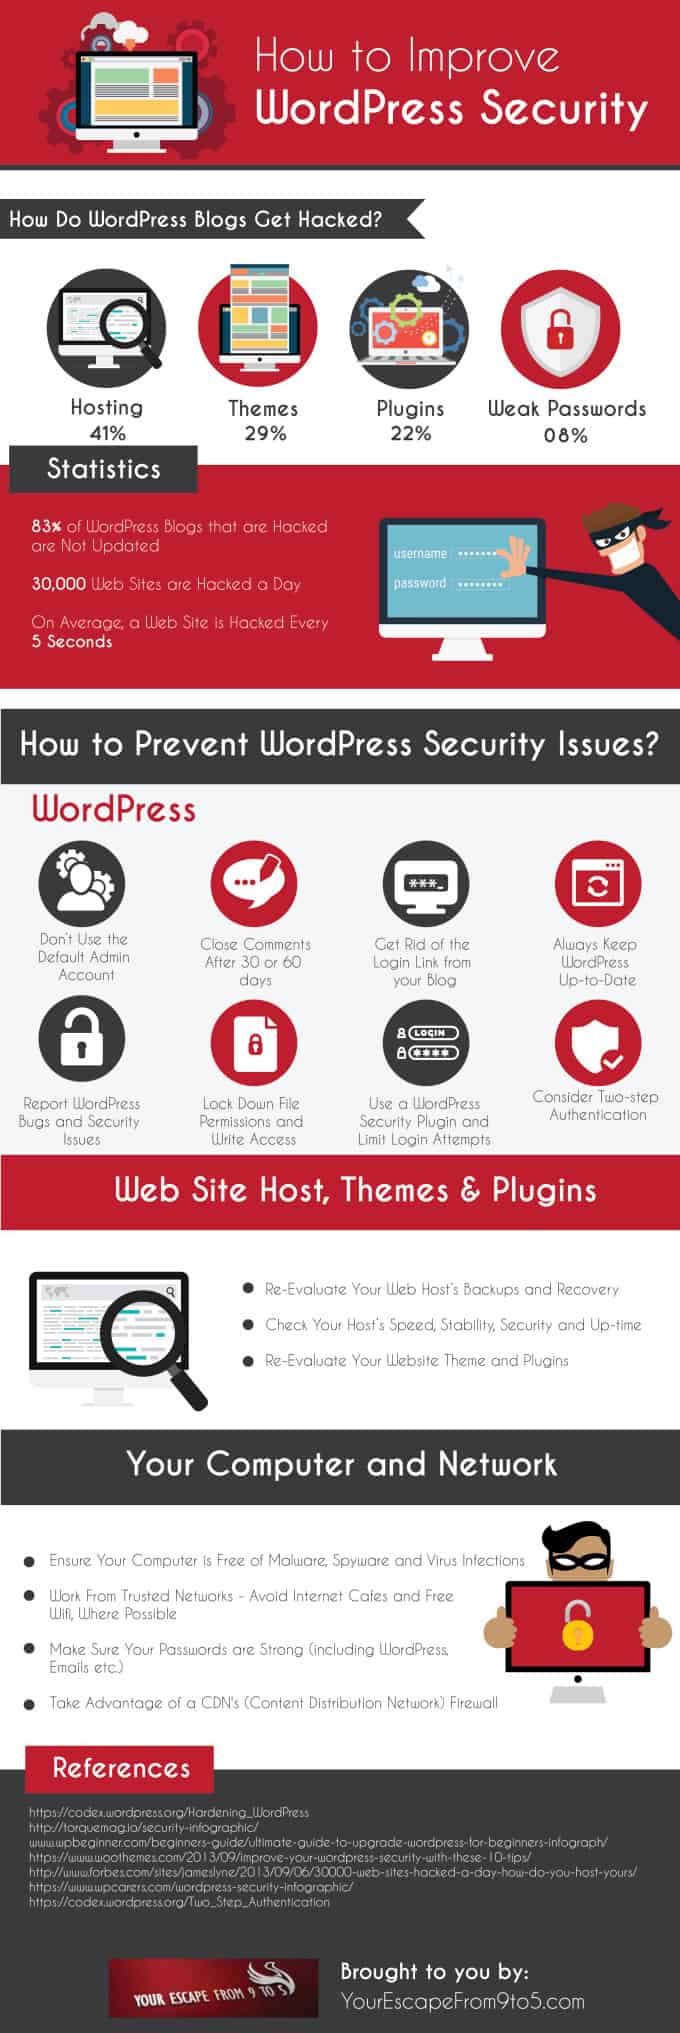 How to Improve WordPress Security Infographic.jpg-e1457572570696